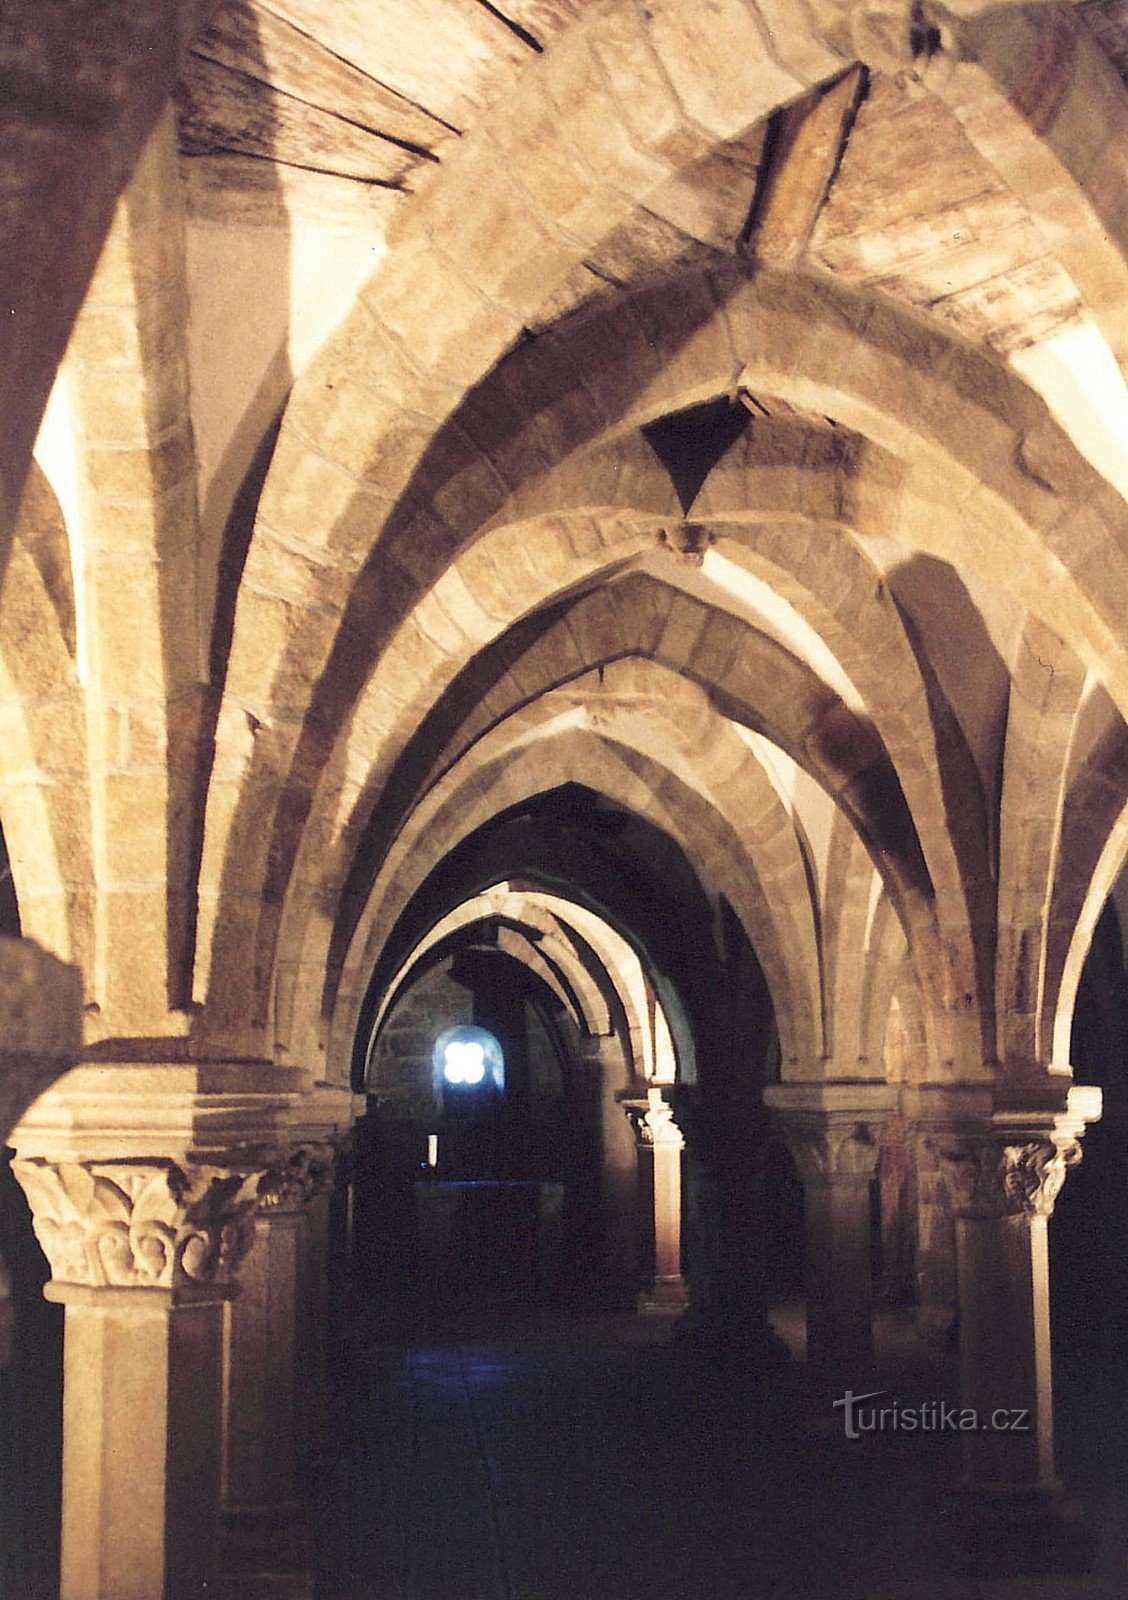 Třebíč – cripta românica